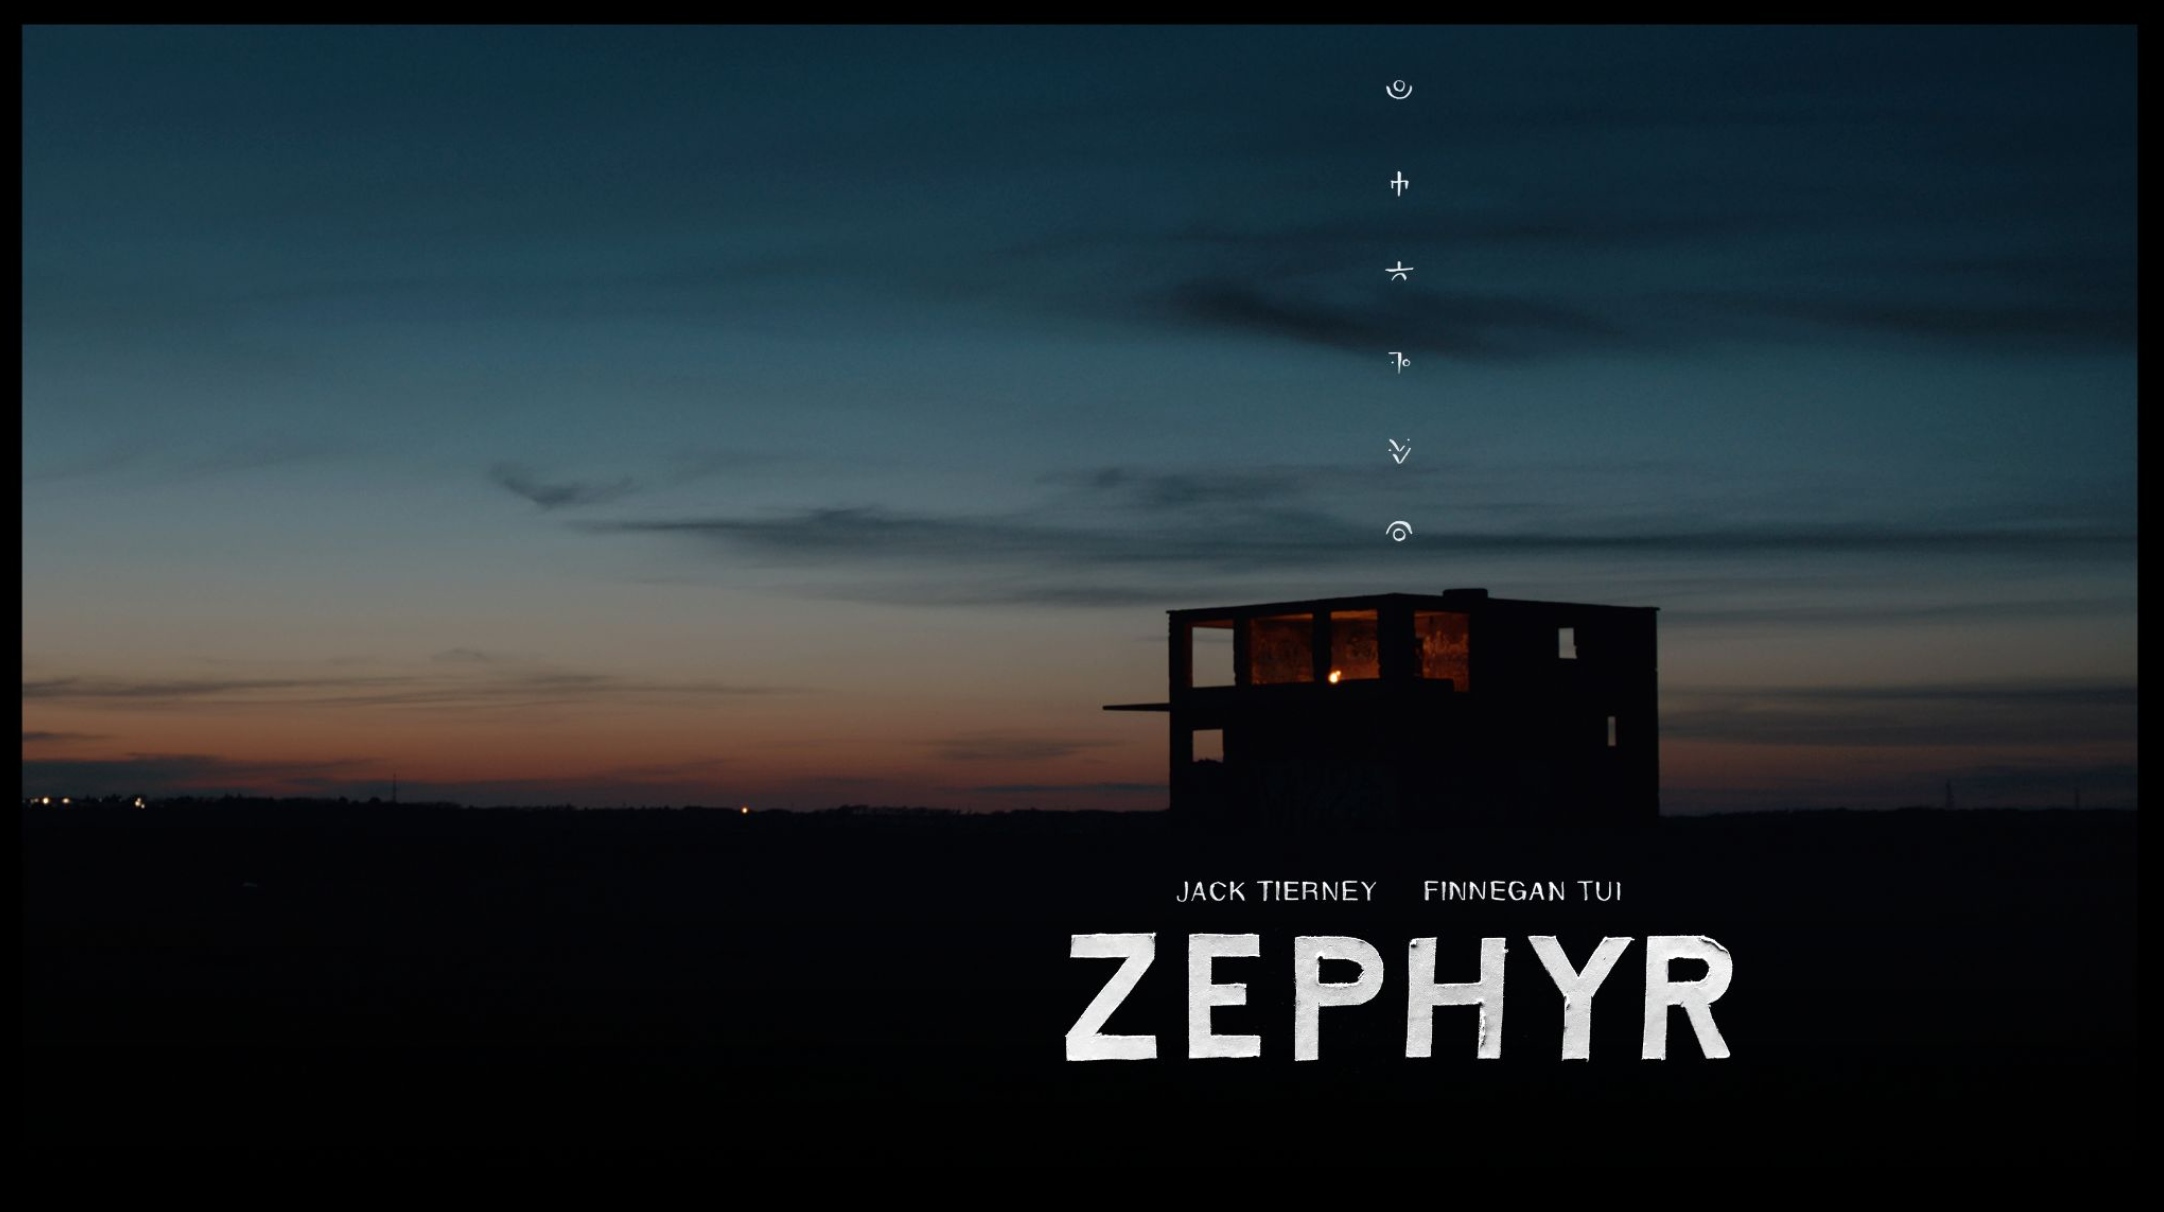 3 July: Zephyr (film screening) plus live music from Finnegan Tui